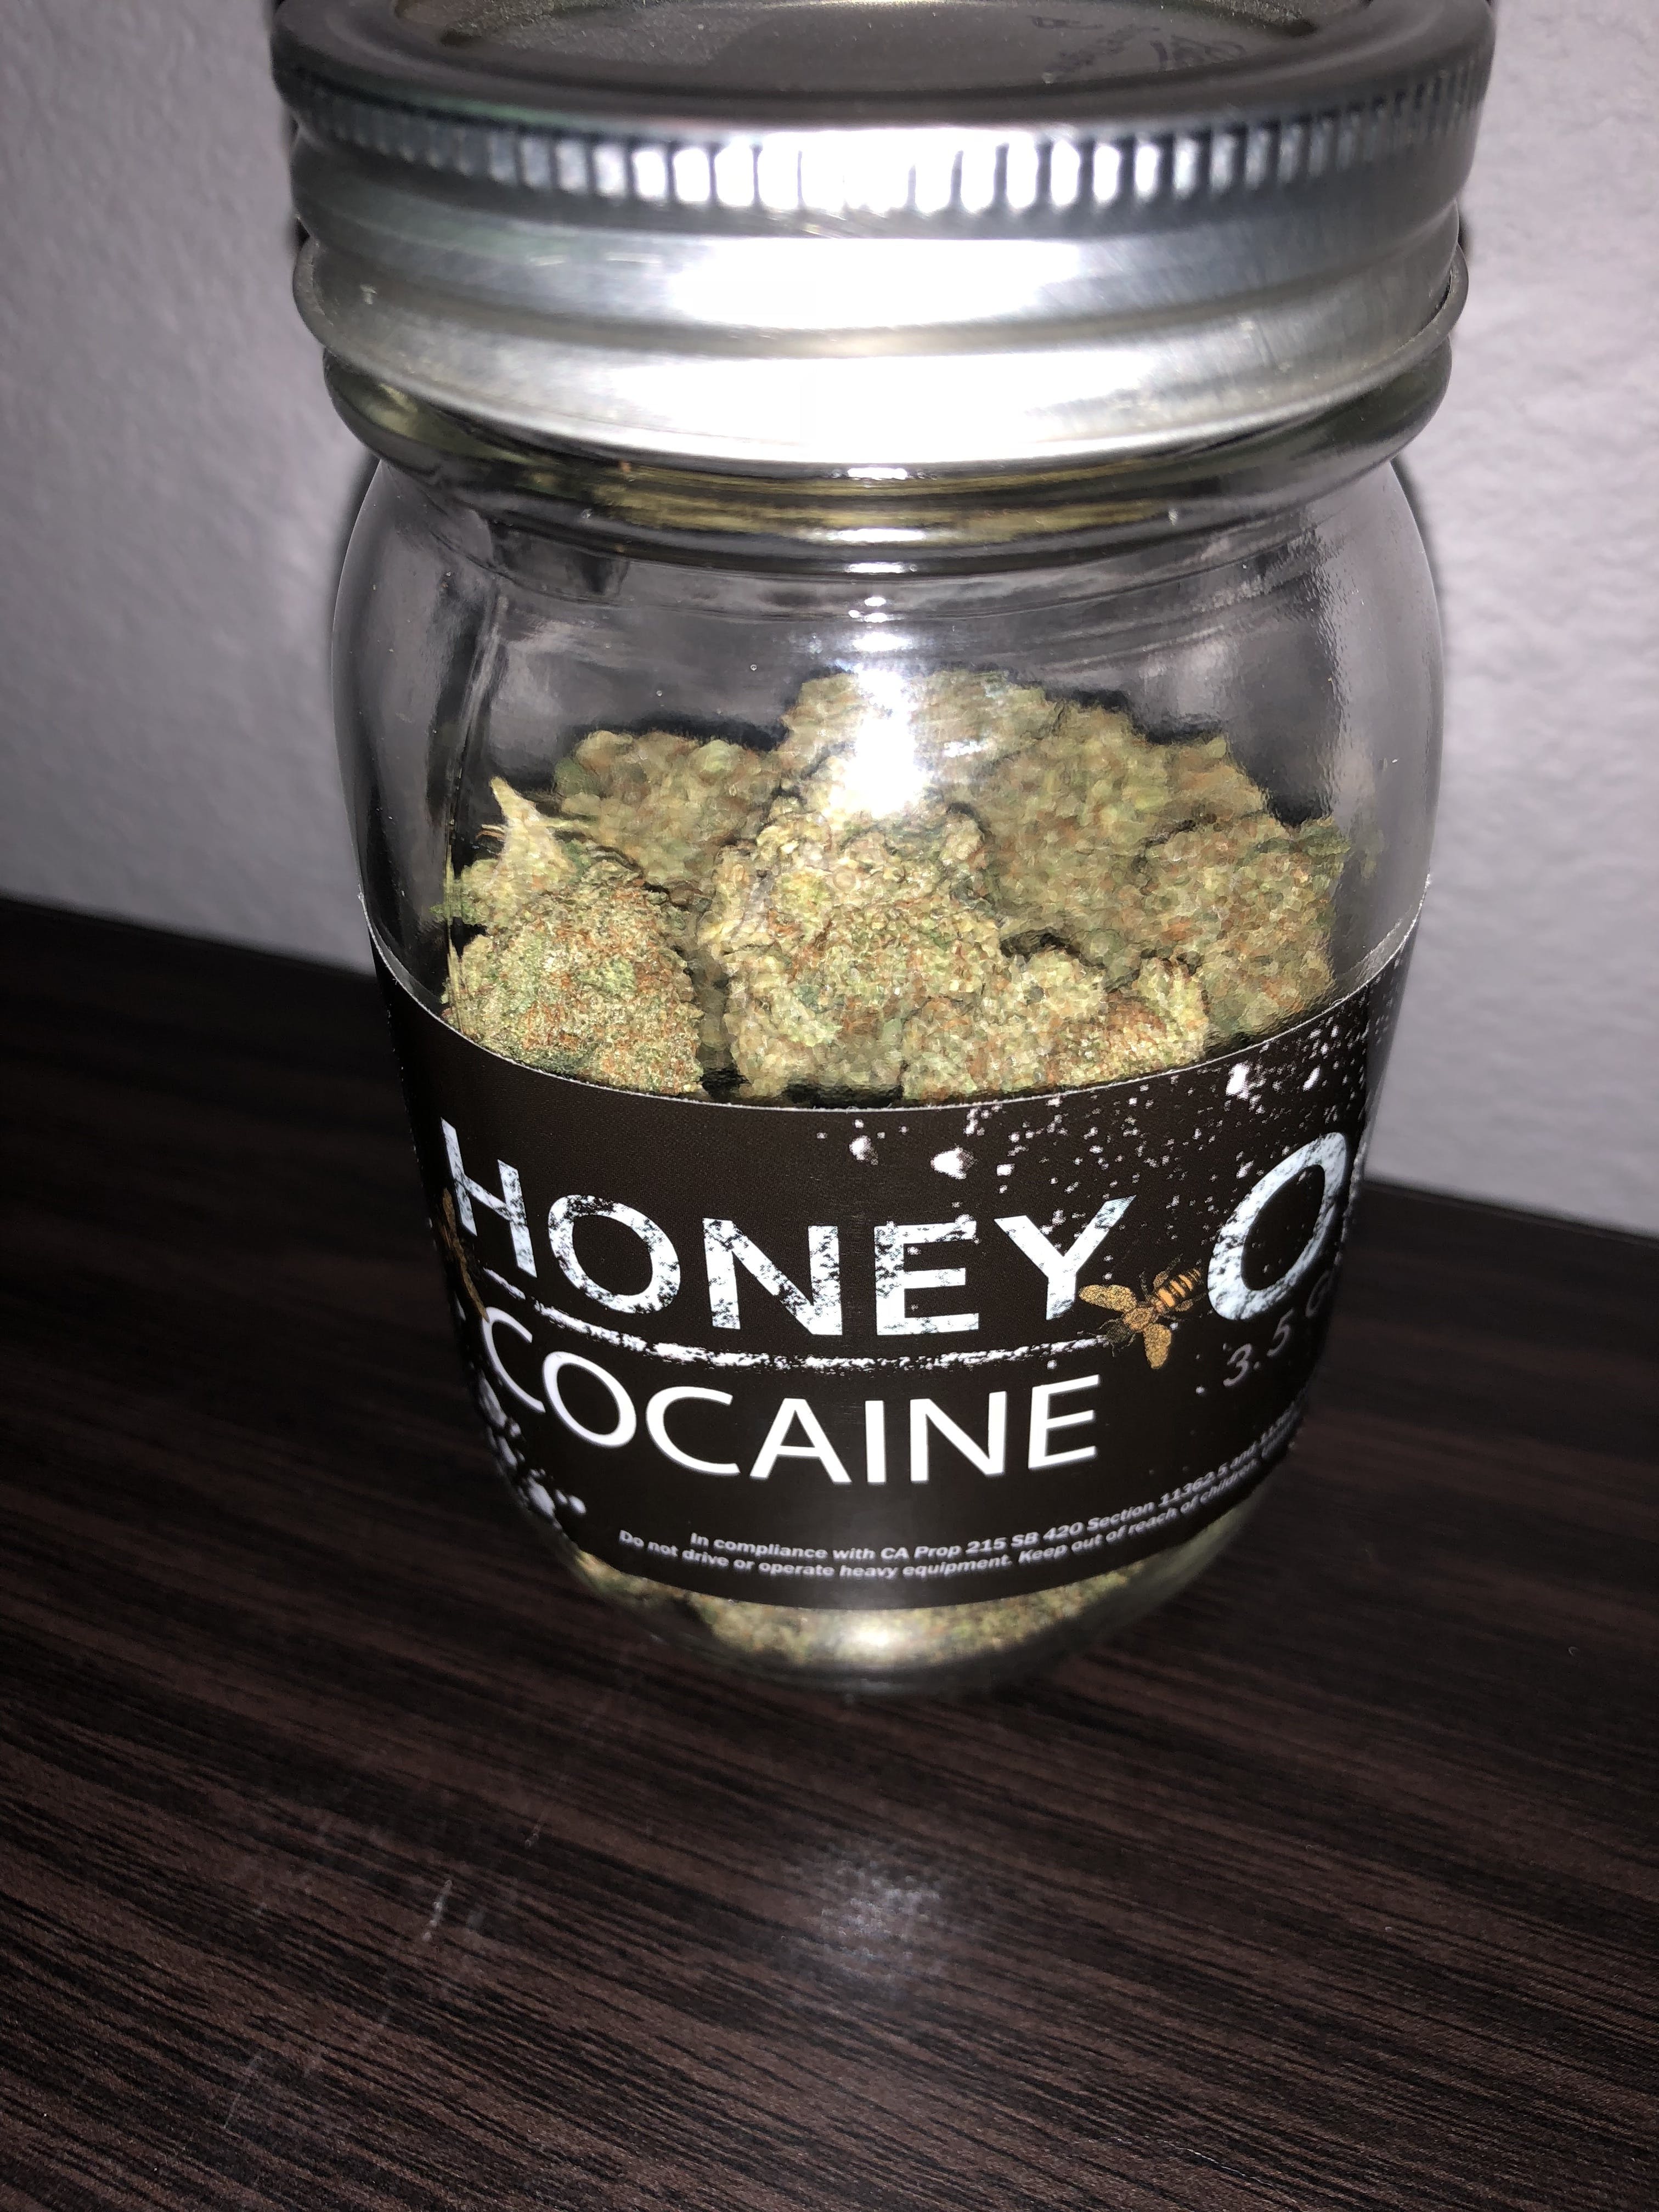 marijuana-dispensaries-buds-r-us-20-cap-in-los-angeles-honey-cocaine-og